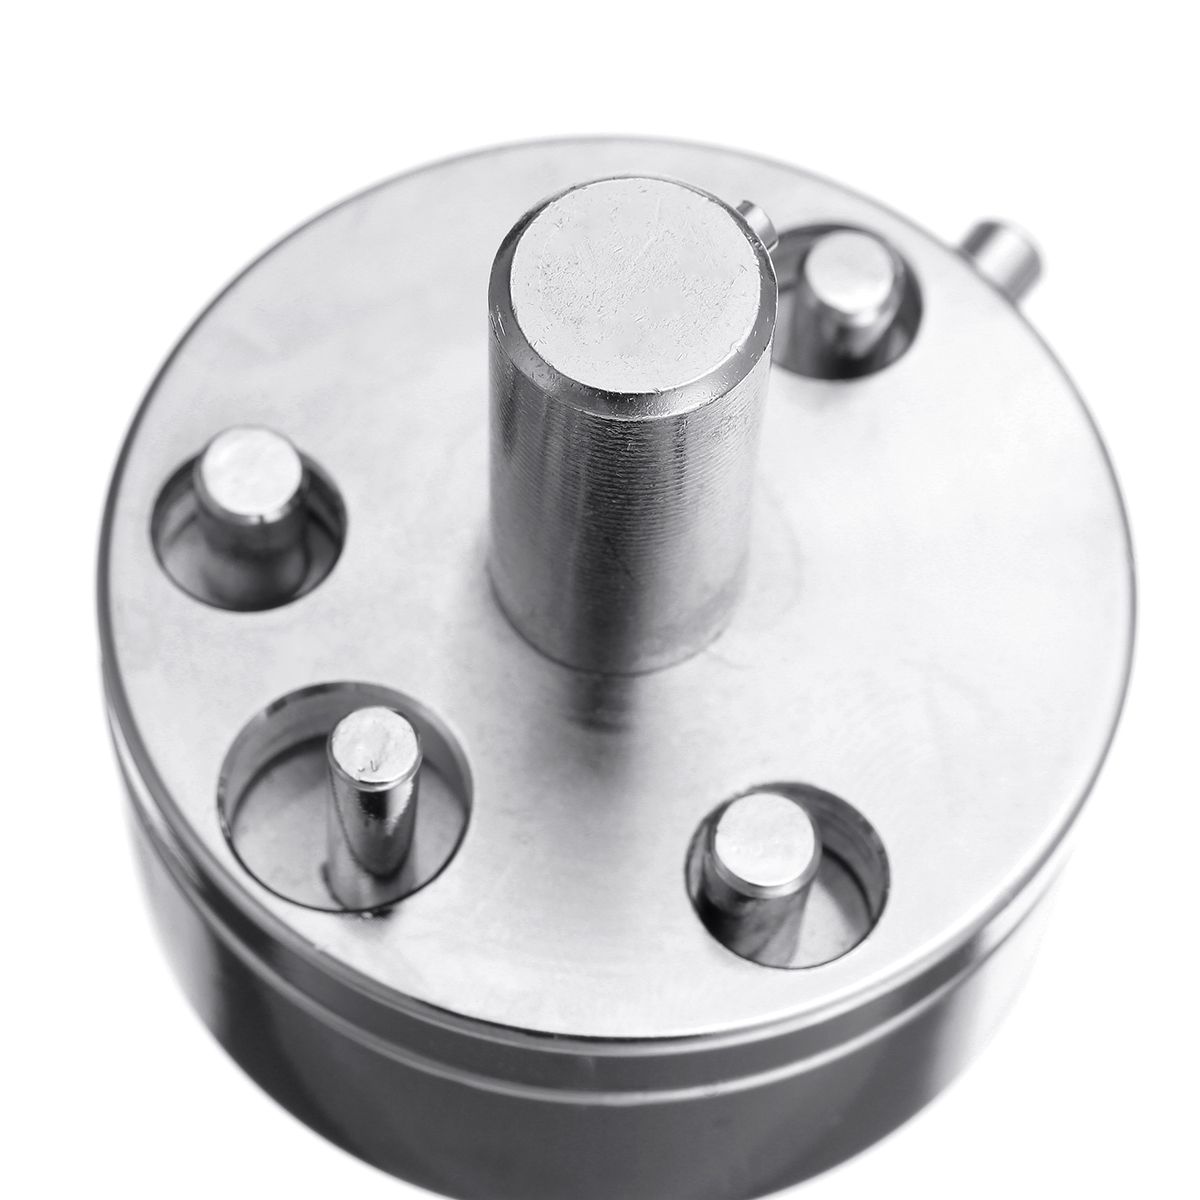 25mm-DIY-Badge-Pin-Making-Mould-Button-Maker-Punch-Press-Machine-Tool-1289894